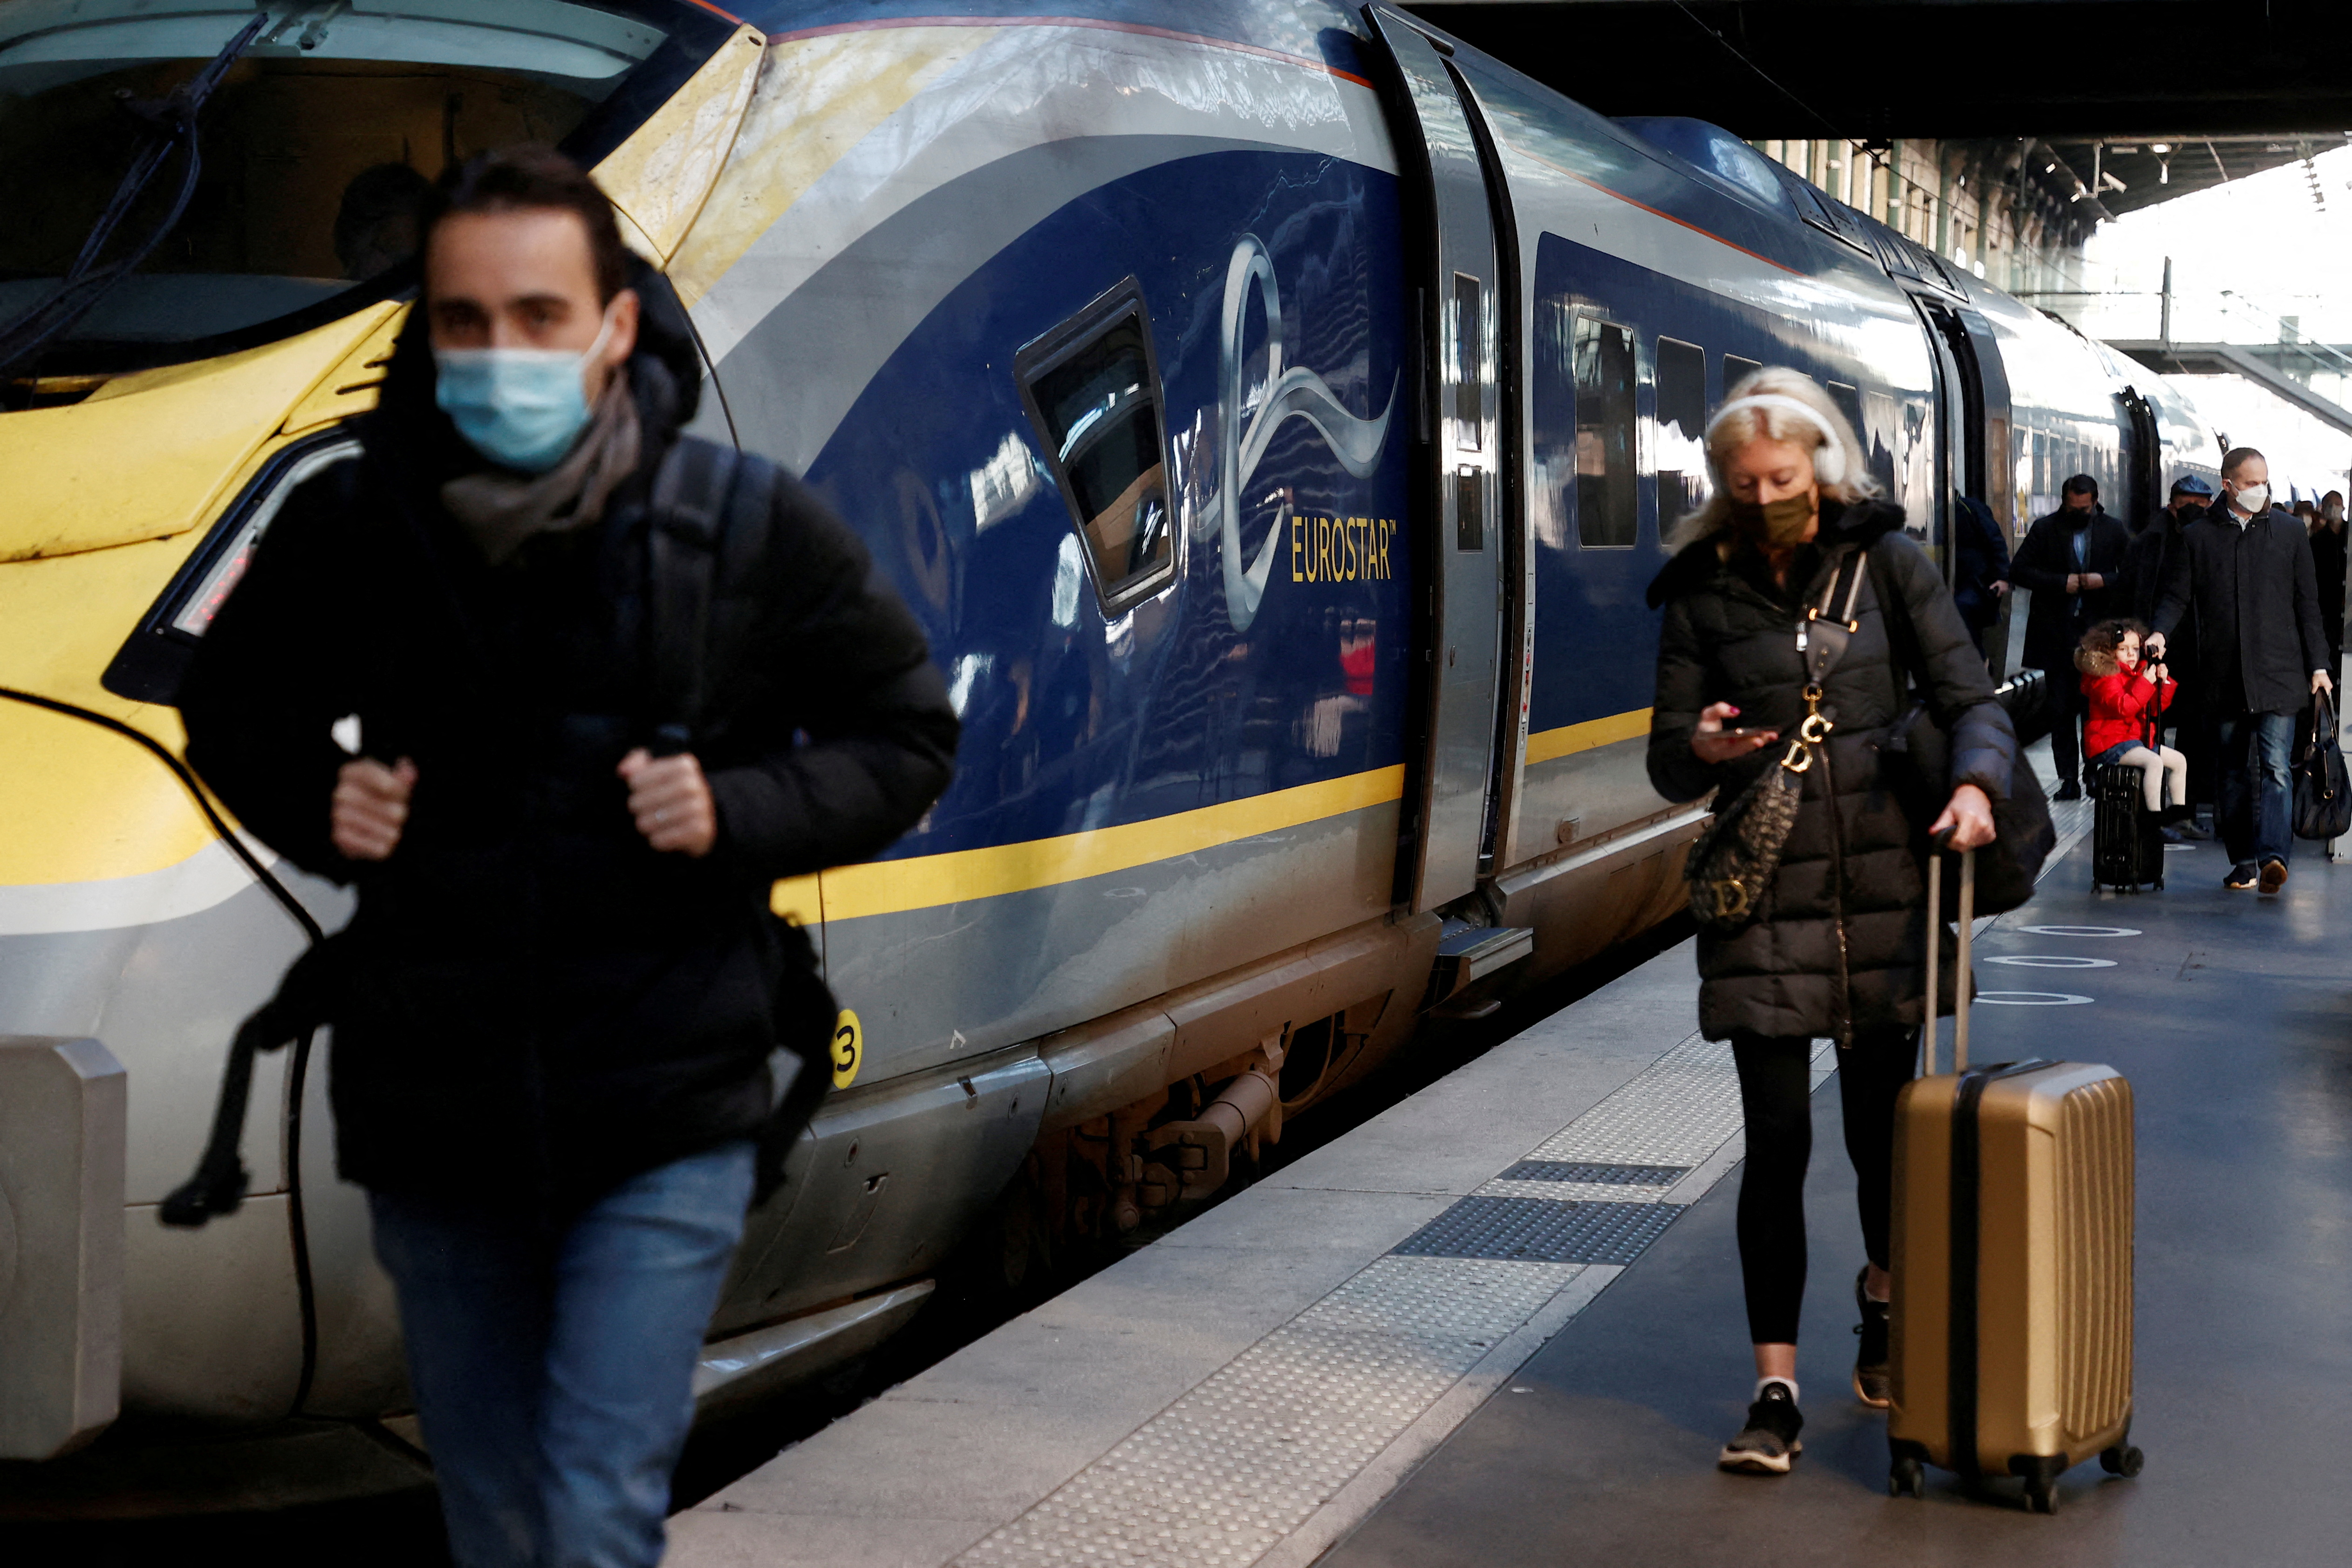 First Eurostar London-Paris arrives at Gare du Nord train station in Paris after France eased travelling restrictions